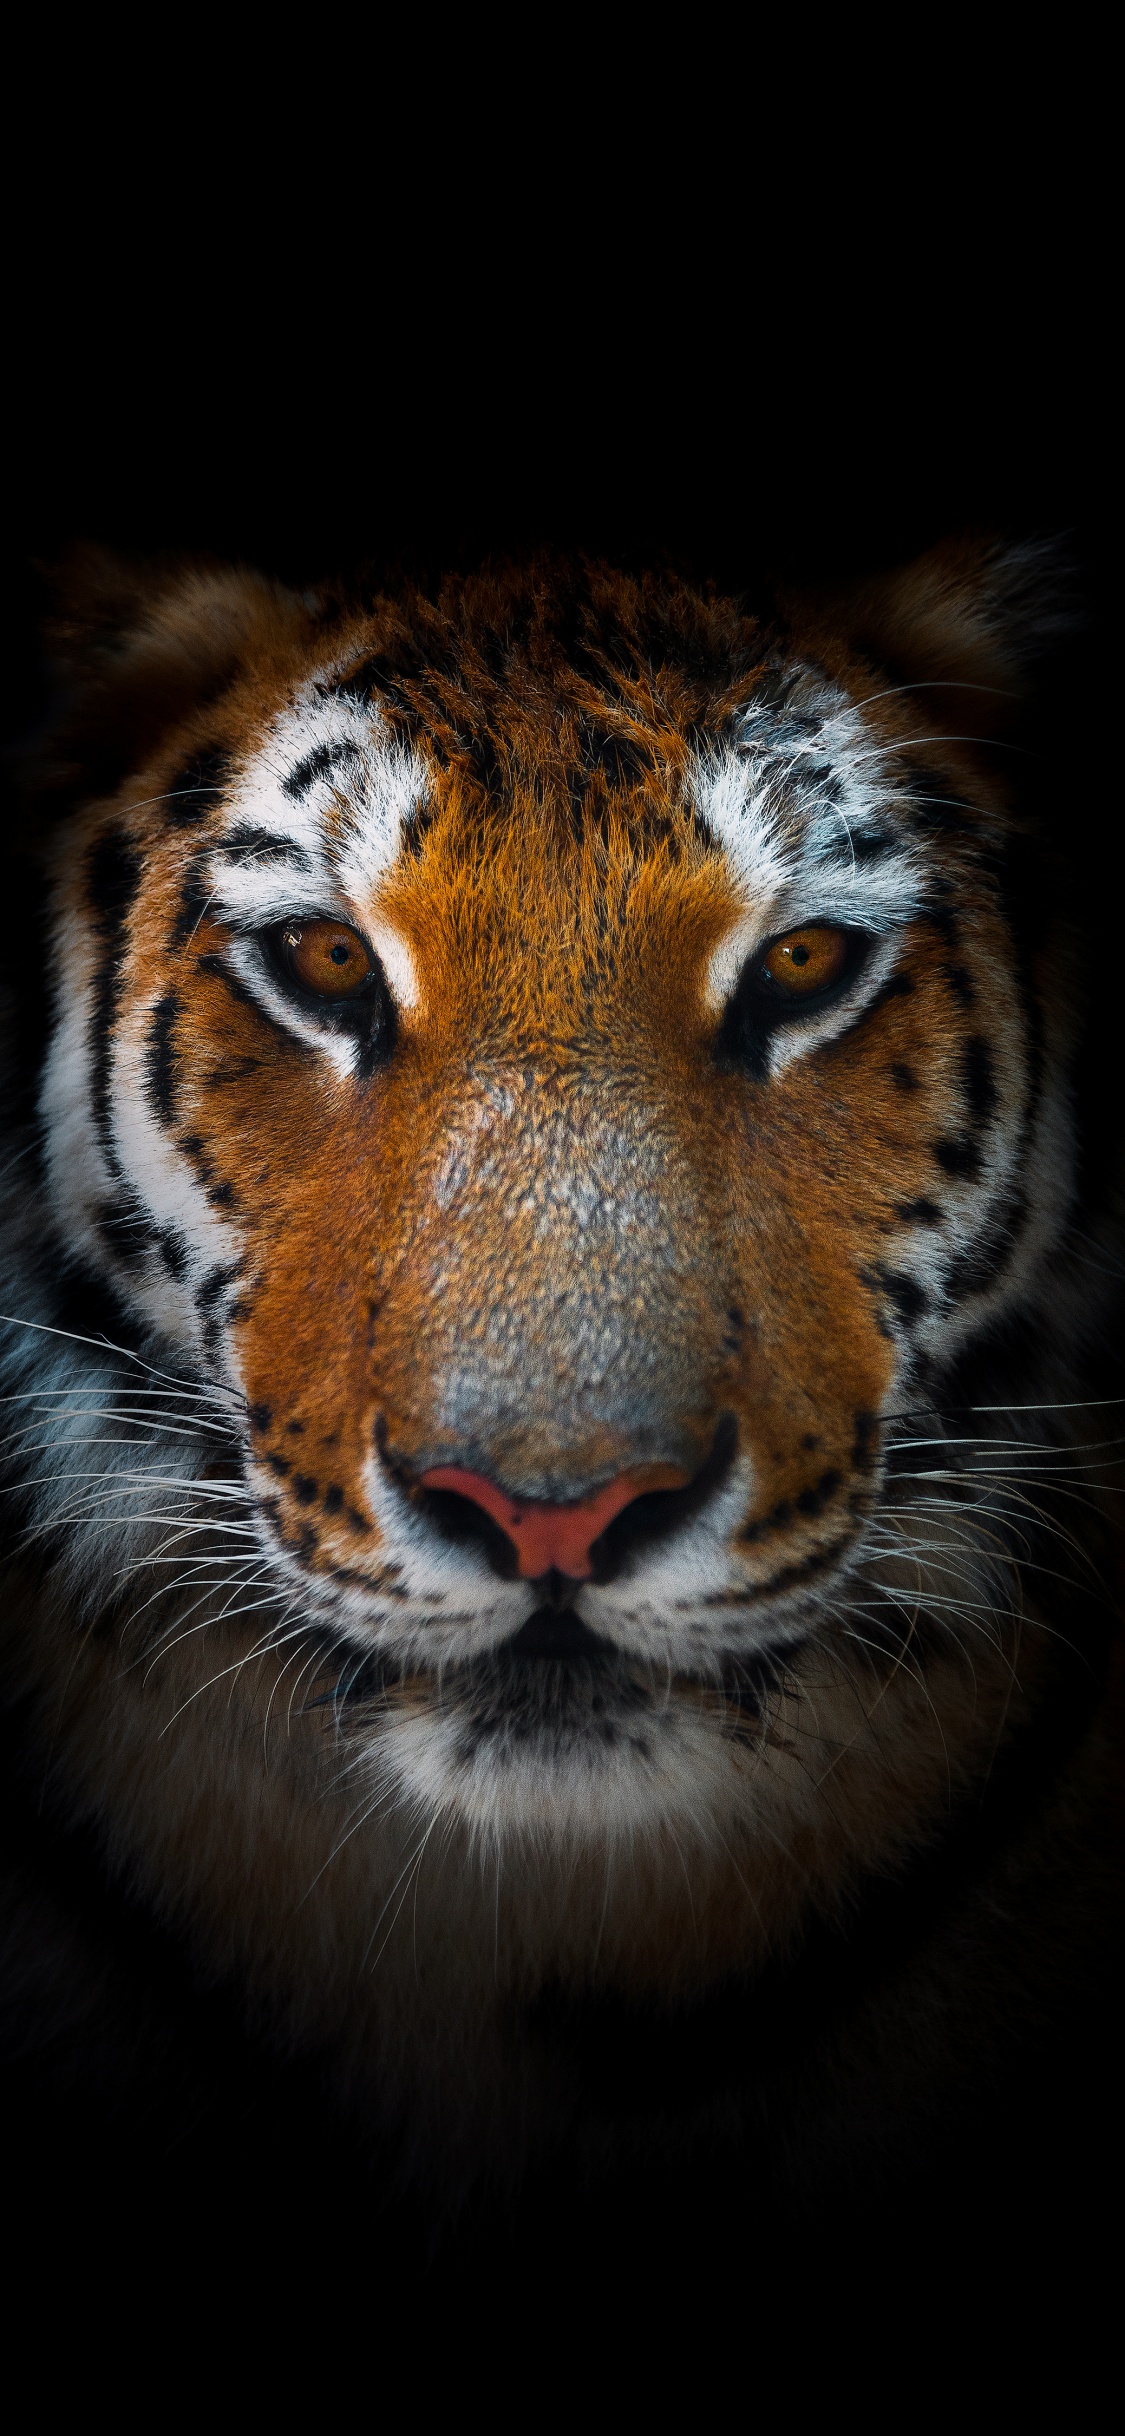 Tiger Predator iPhone Wallpaper - Wallpapers Download 2023